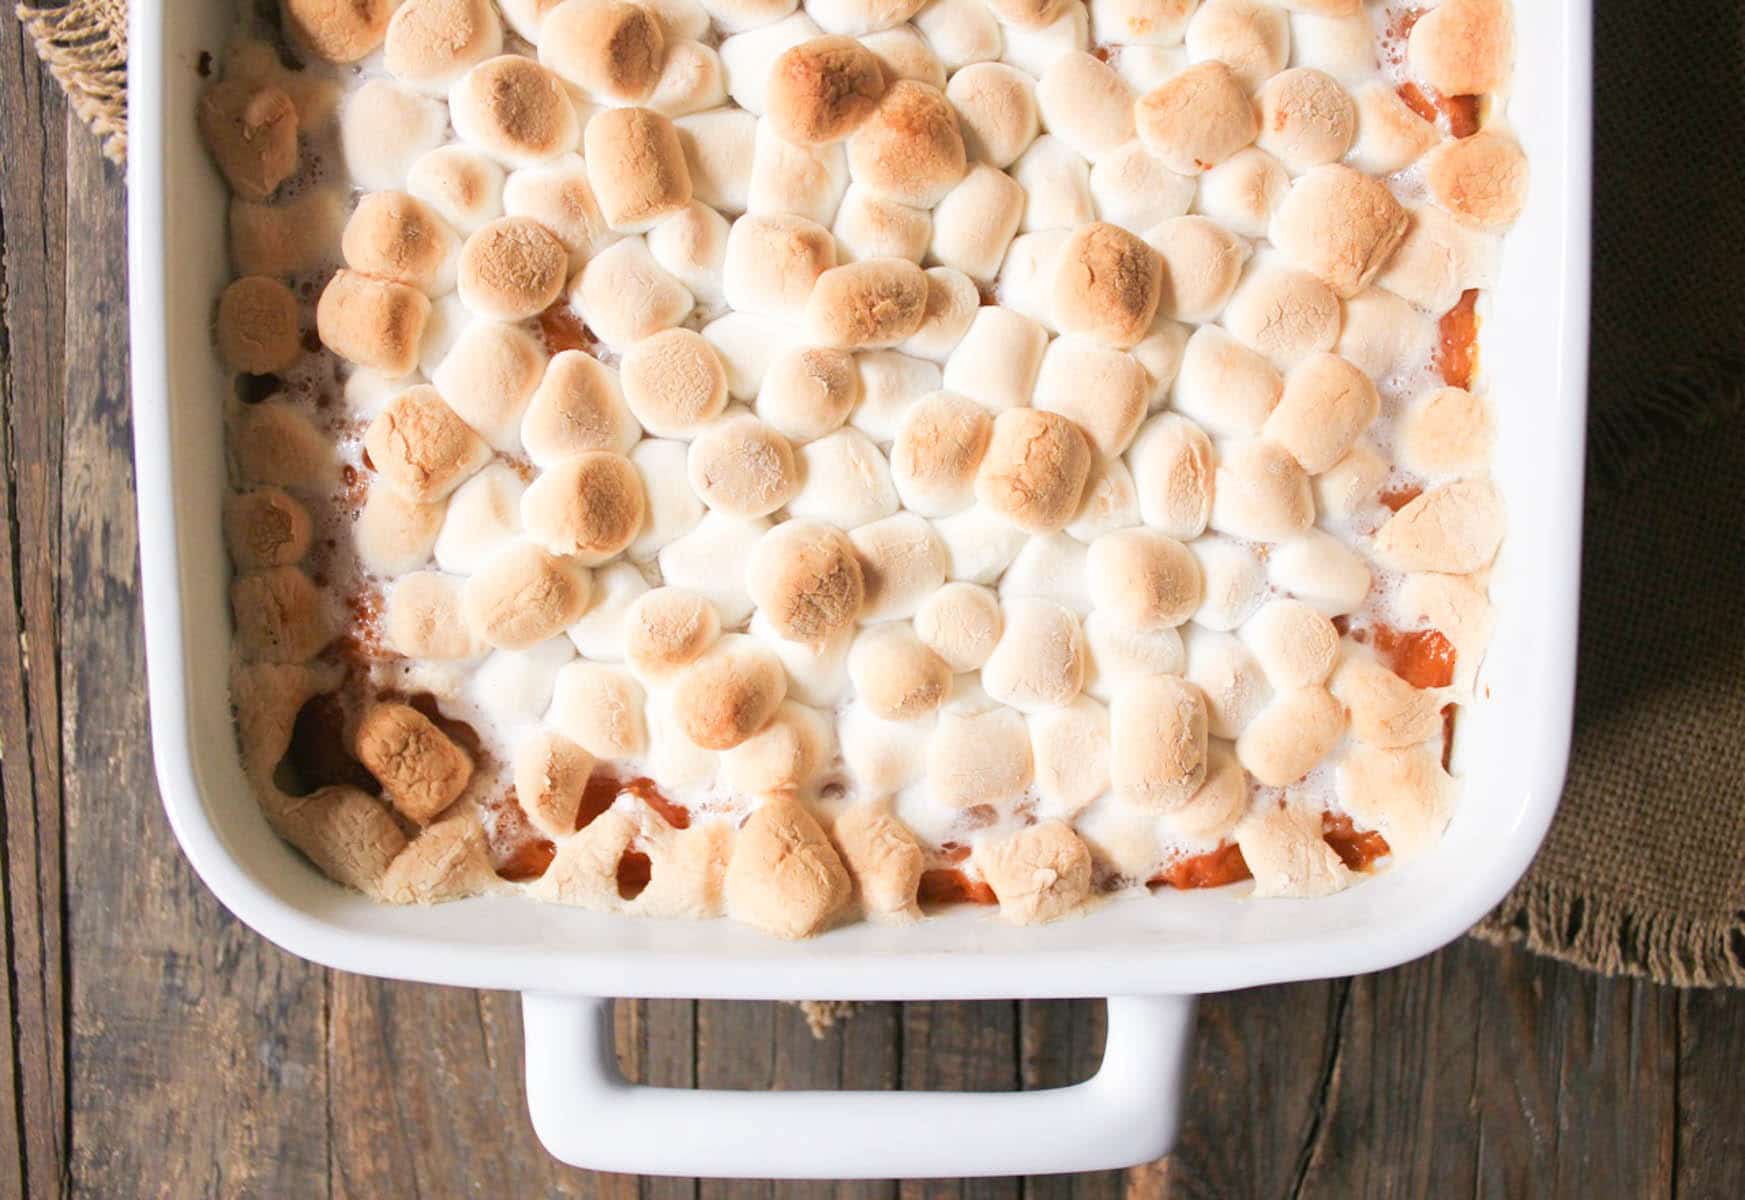 sweet-potato-casserole-with-marshmallows-7